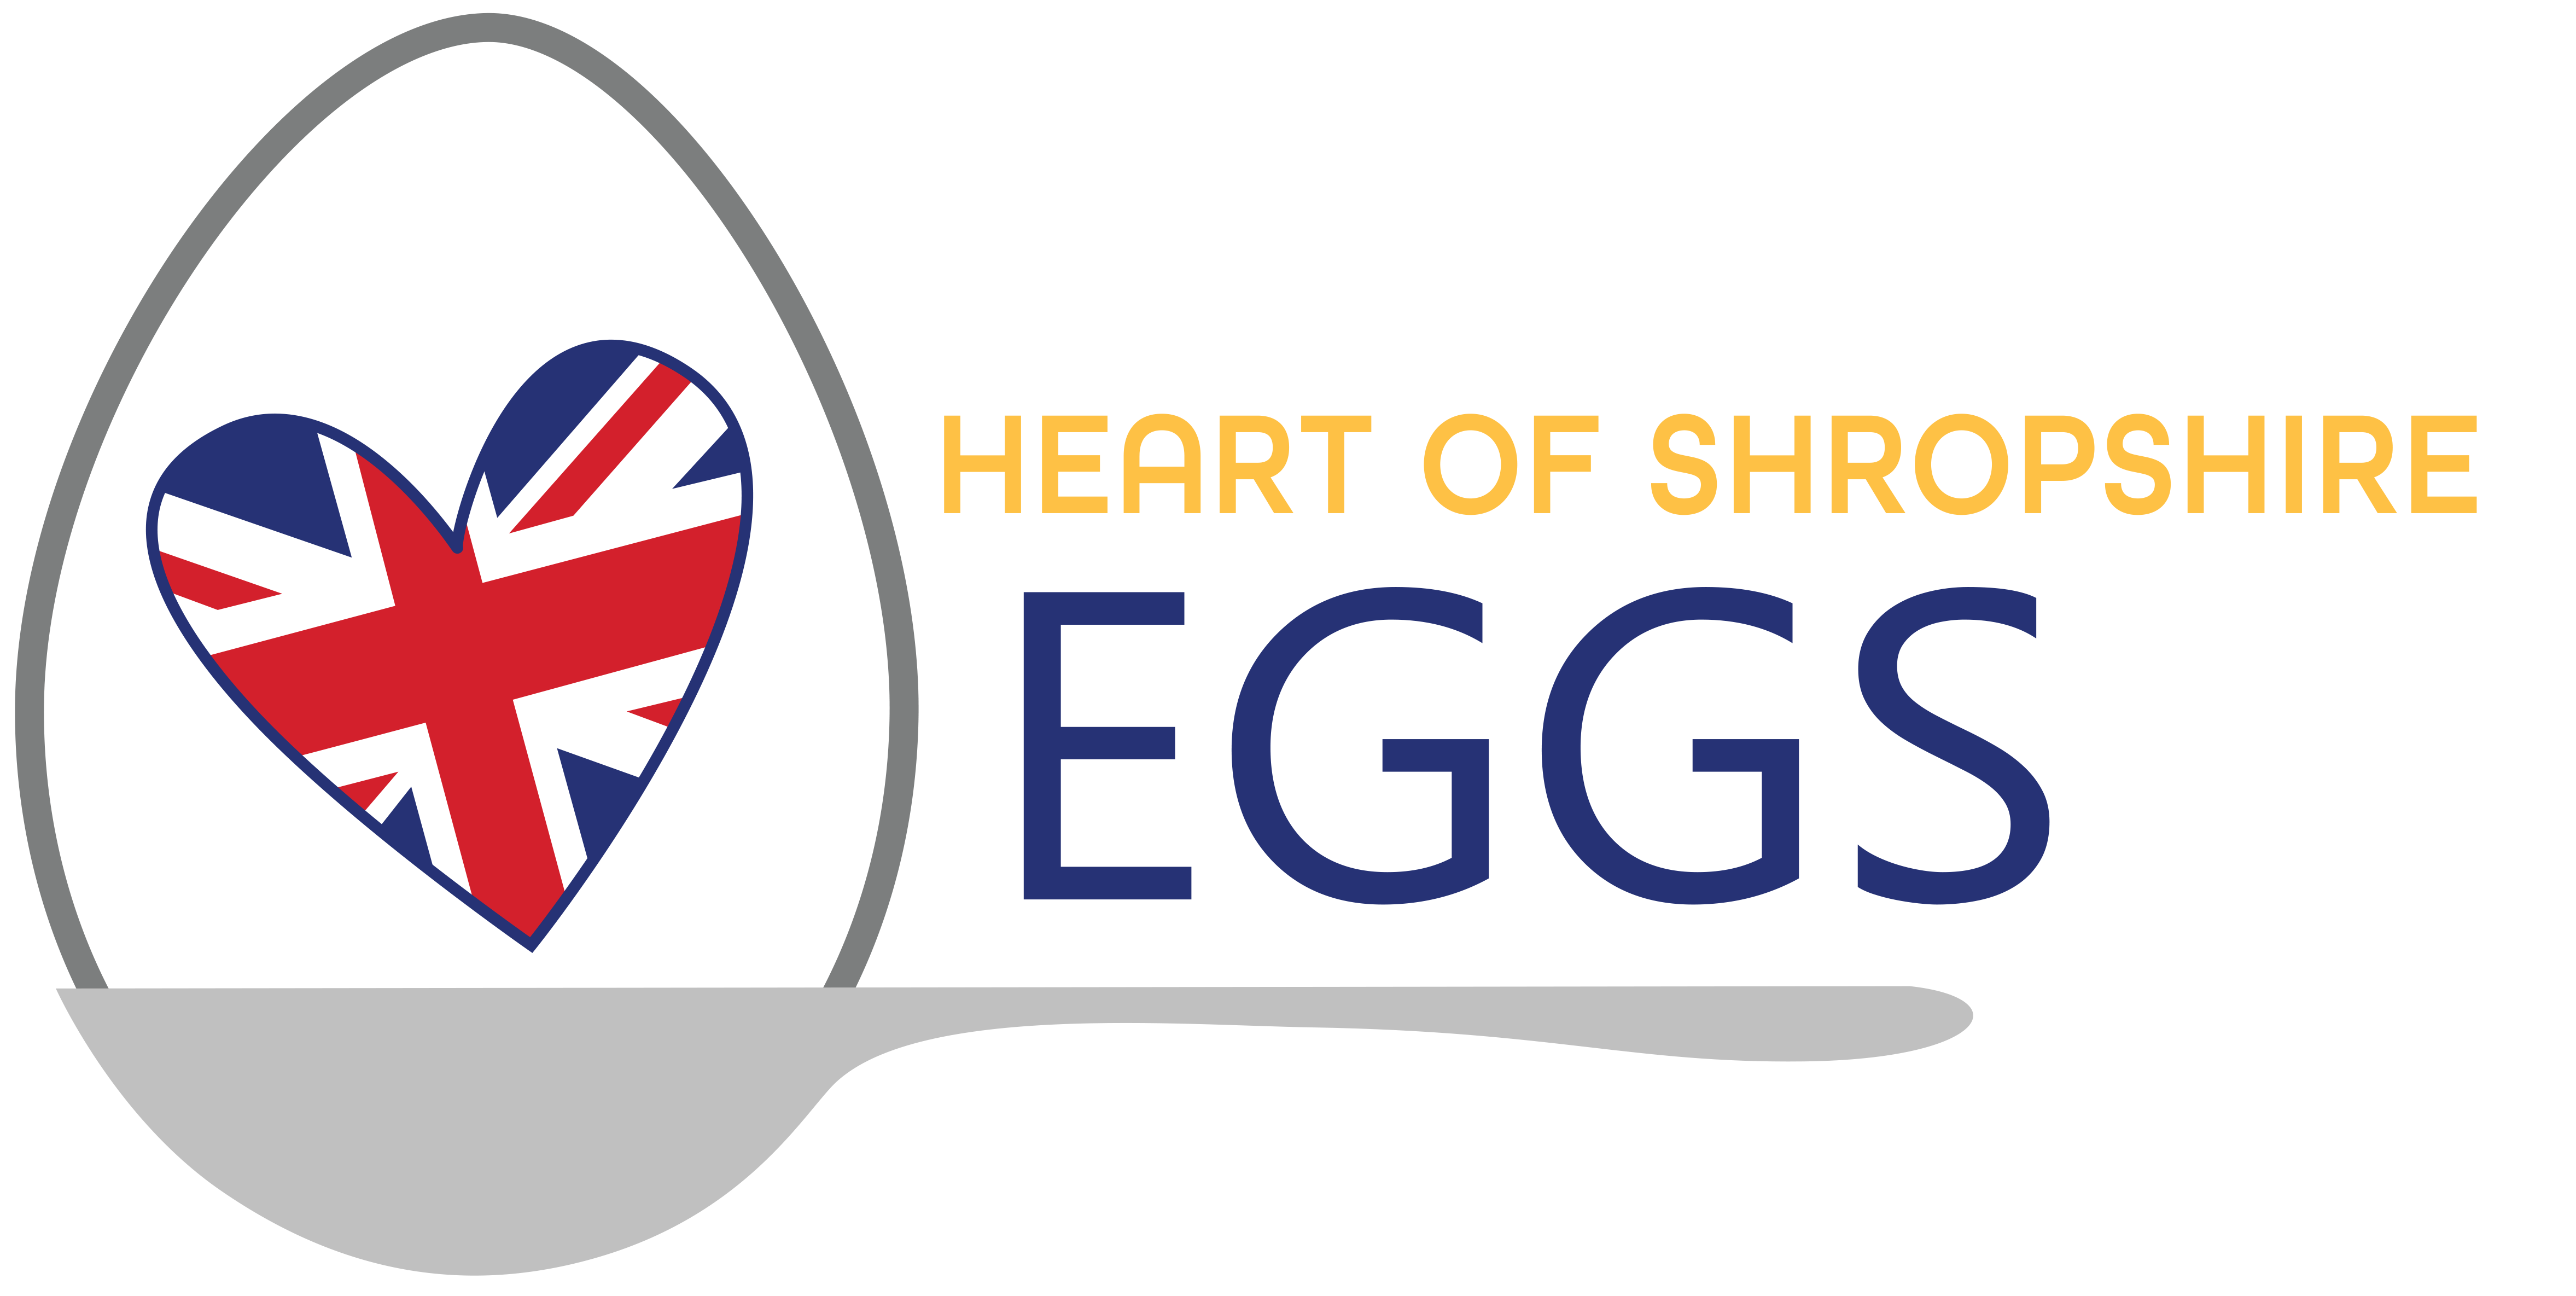 Heart of Shropshire Eggs